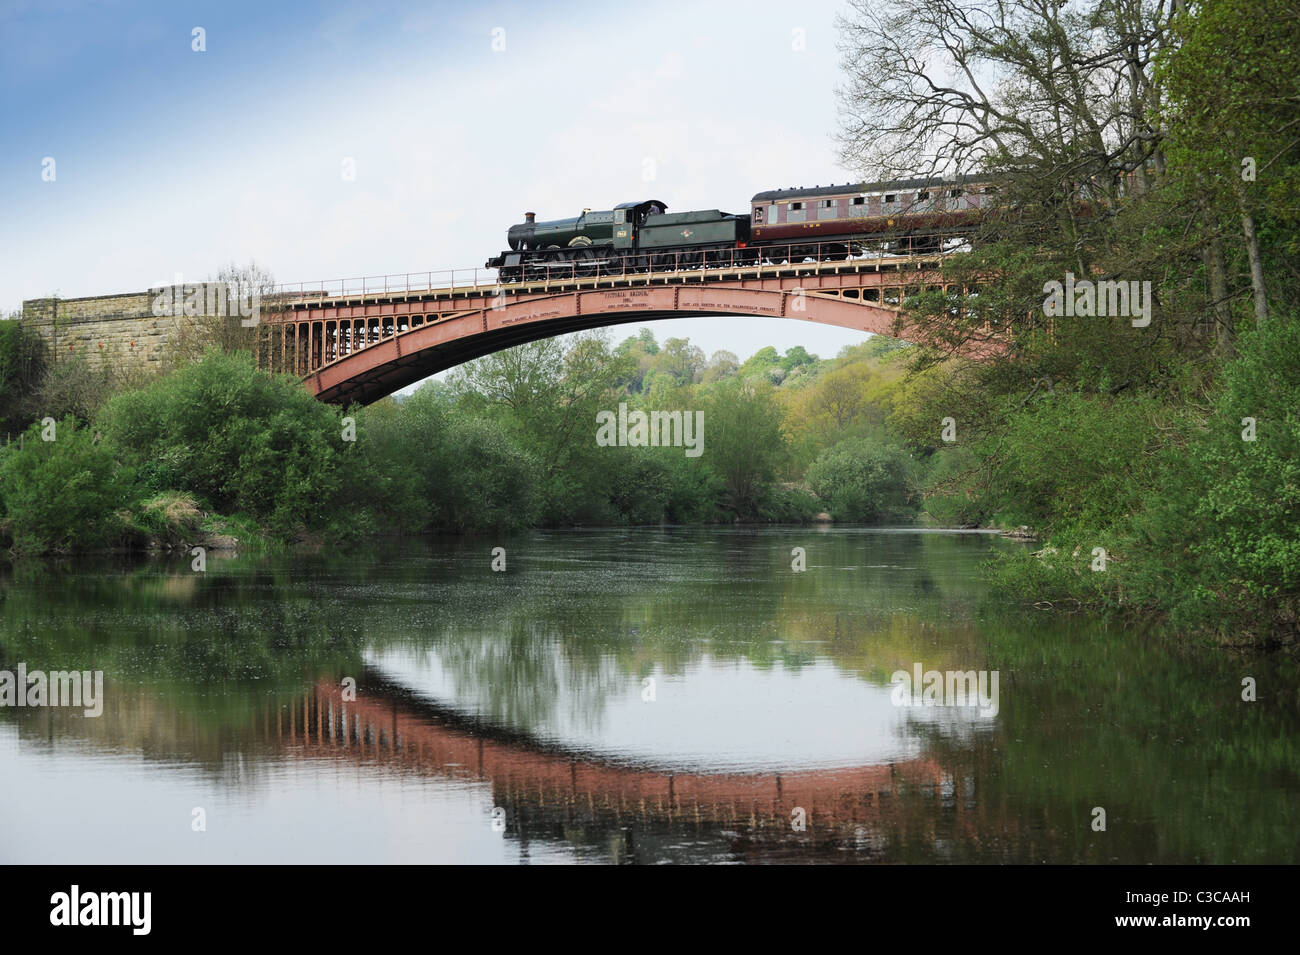 Dampf-Lokomotive Kreuzung Severn Valley Railway Victoria Bridge Arley in Worcestershire England Uk Stockfoto